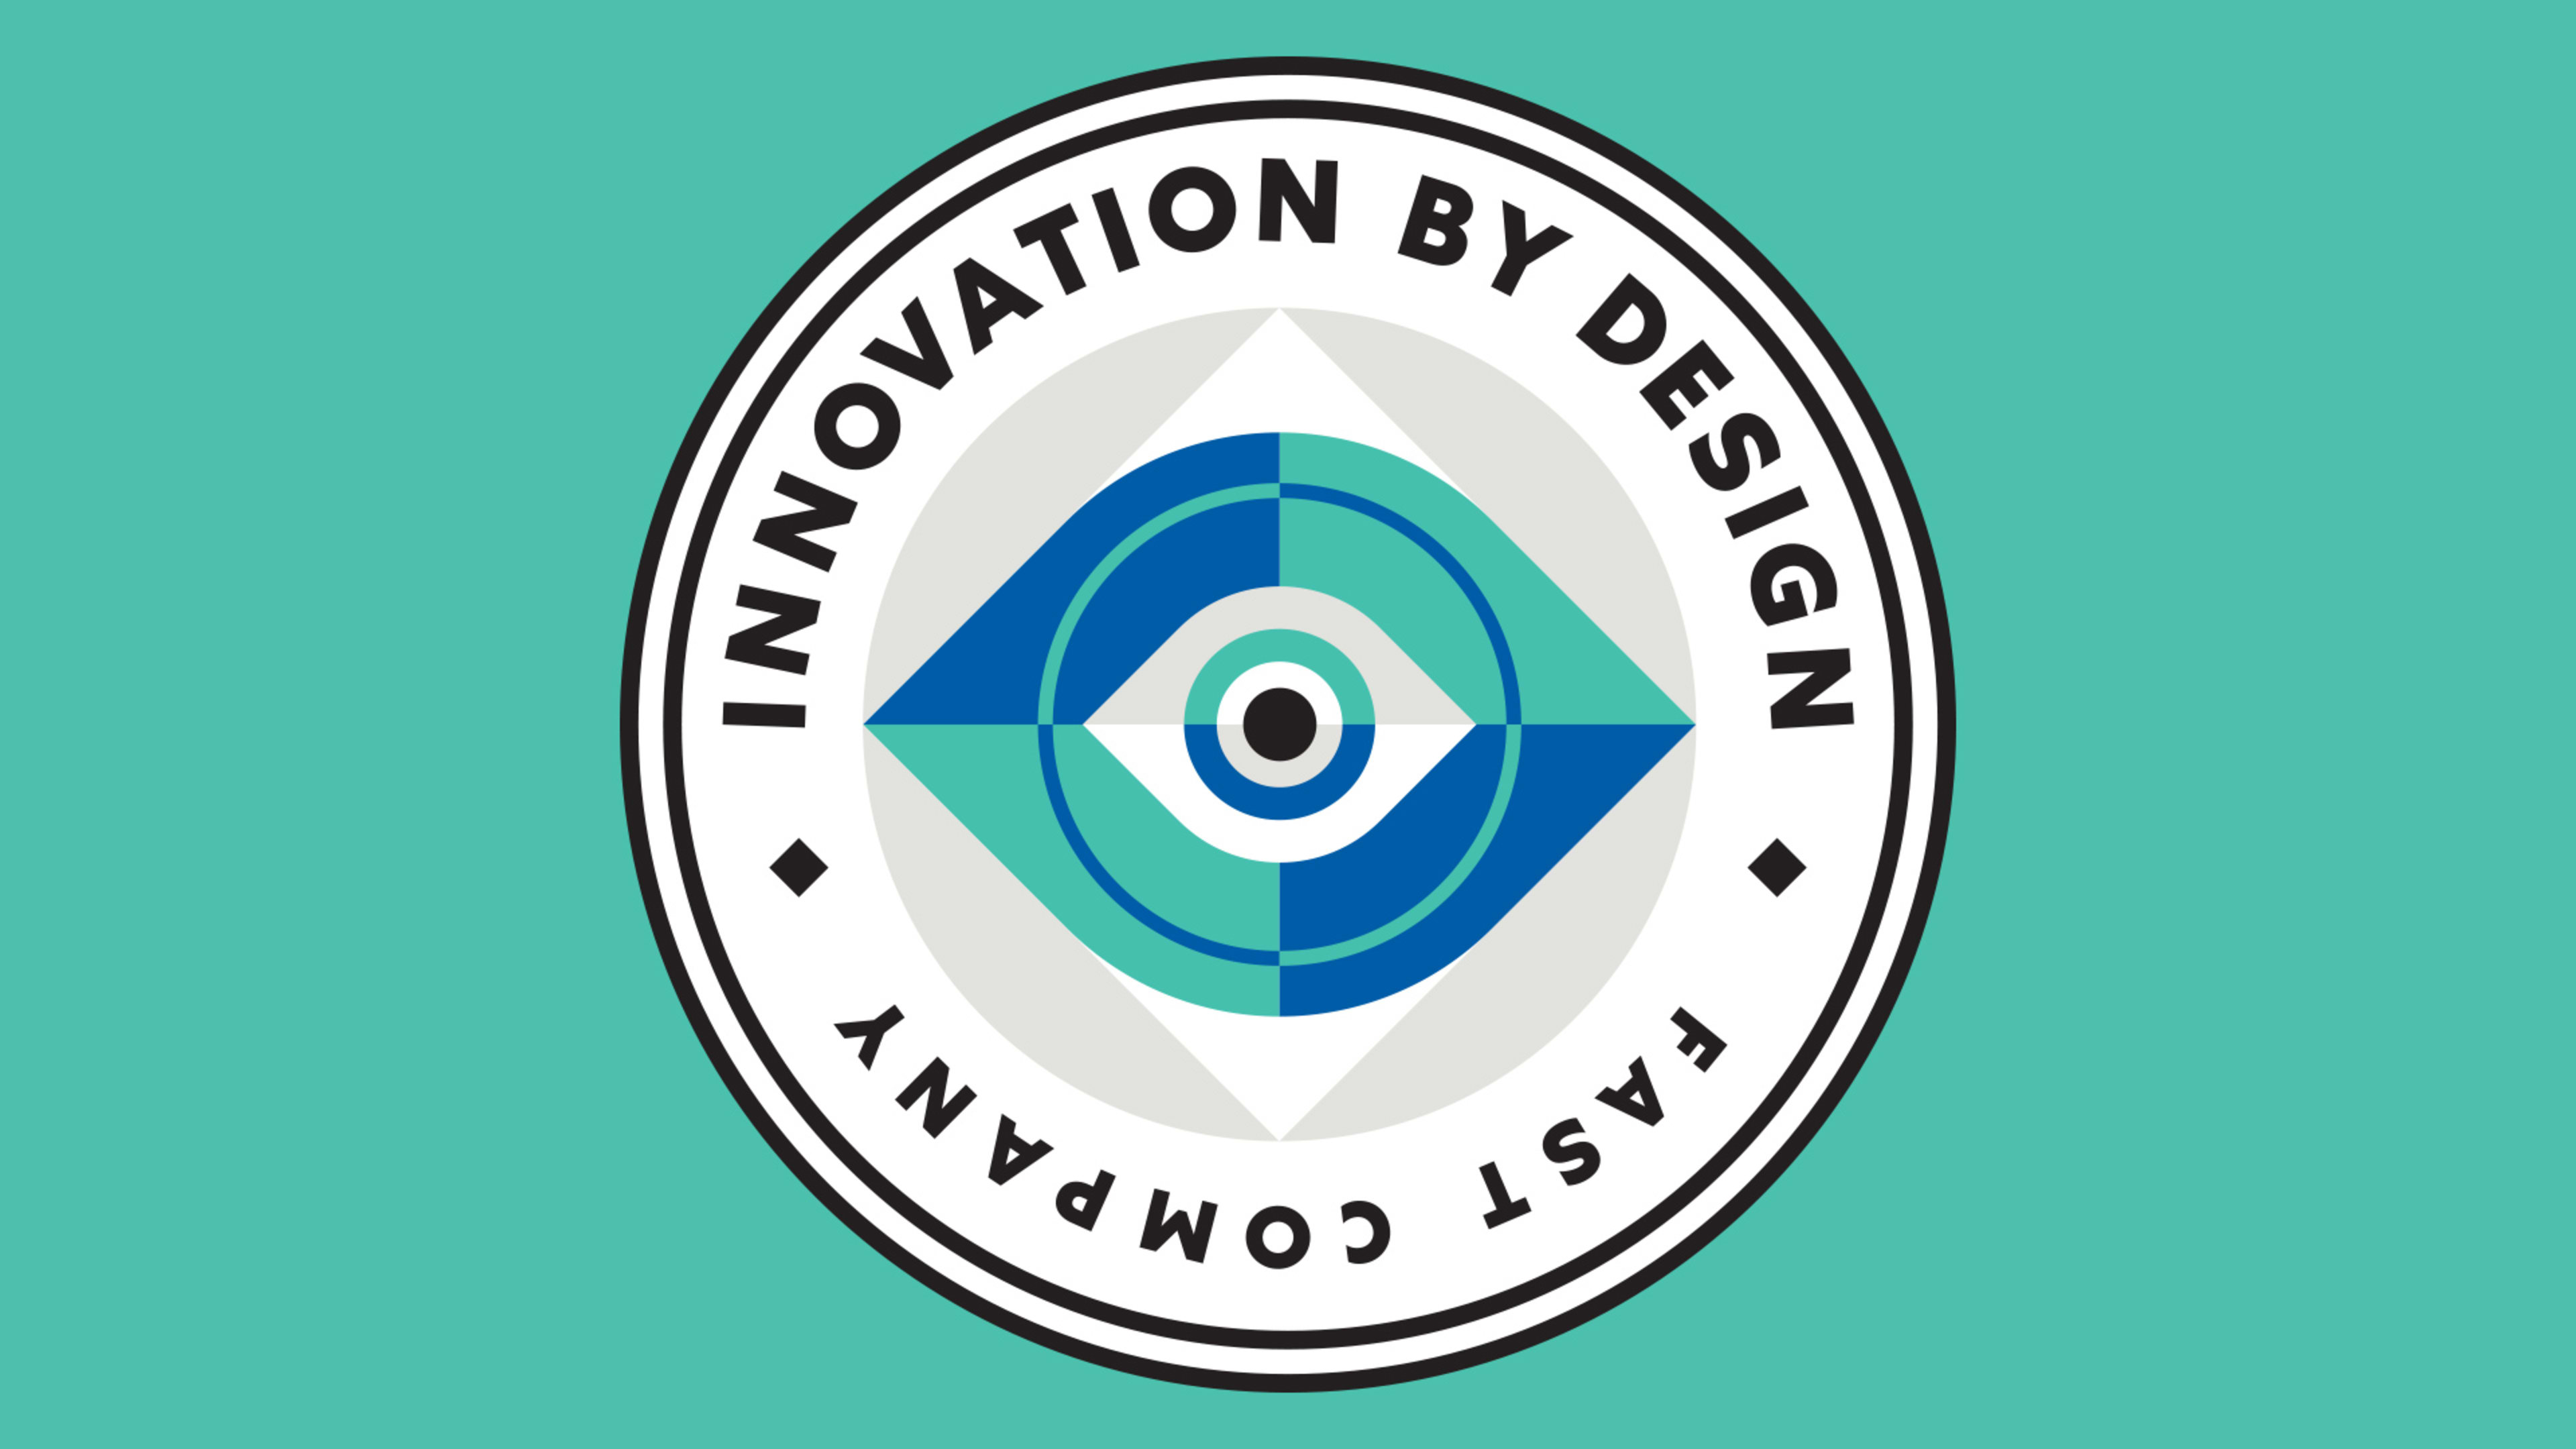 Enter the 2019 Innovation by Design Awards!